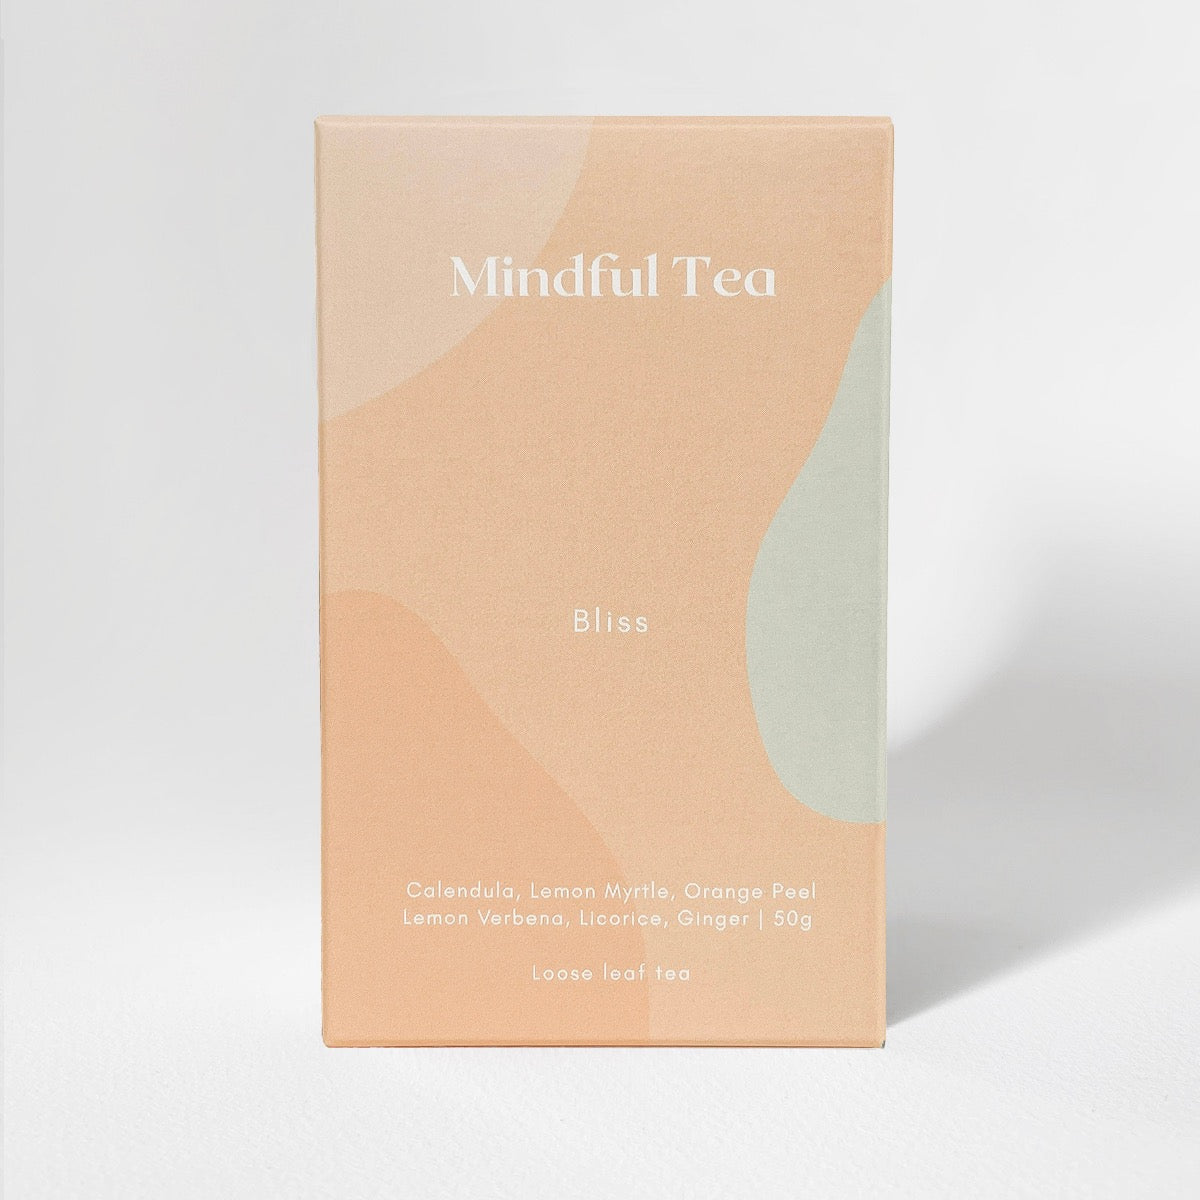 Mindful Tea-Bliss 50g